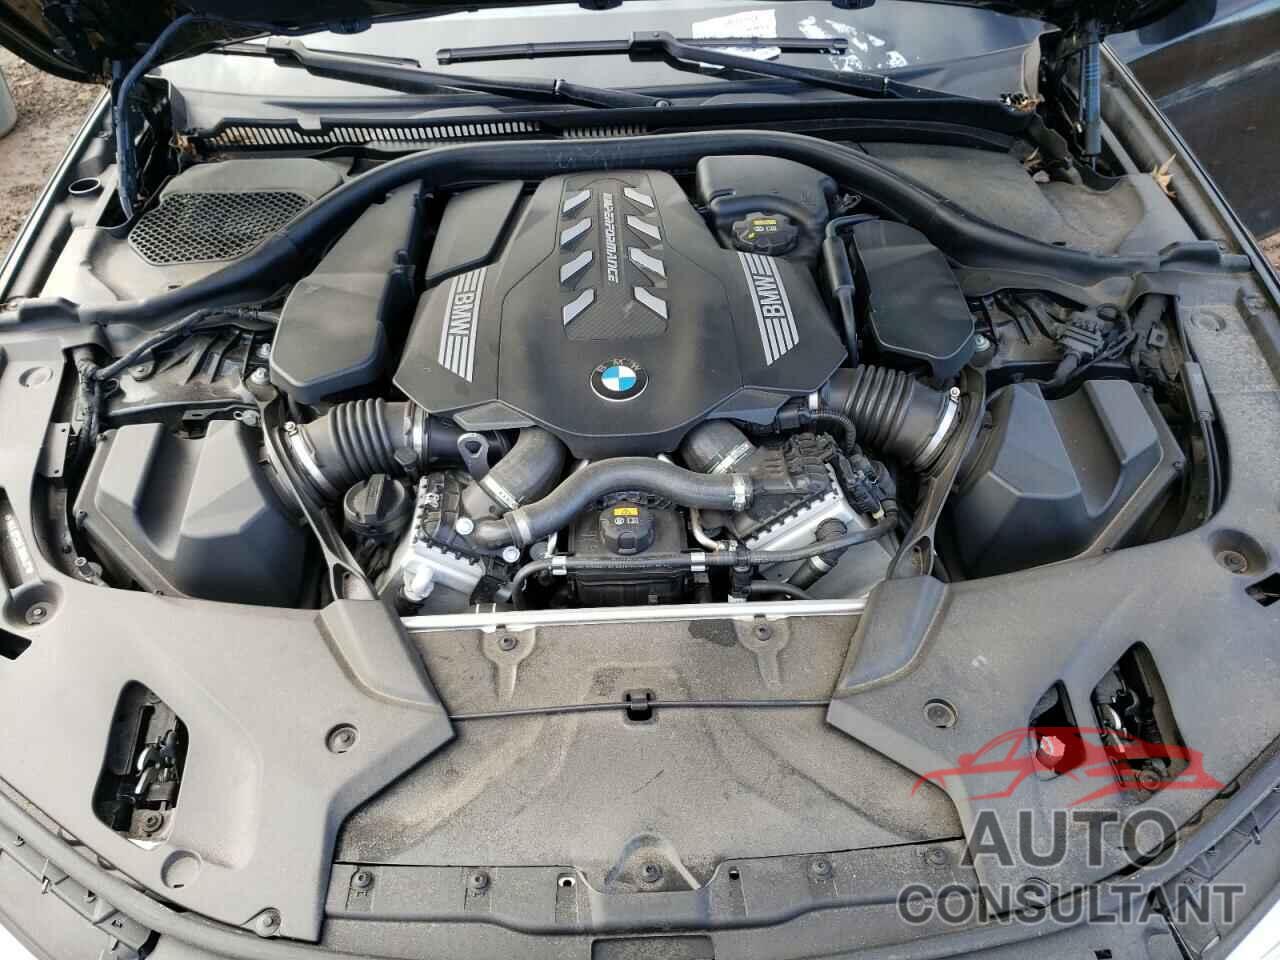 BMW M5 2020 - WBAJS7C08LBN96497